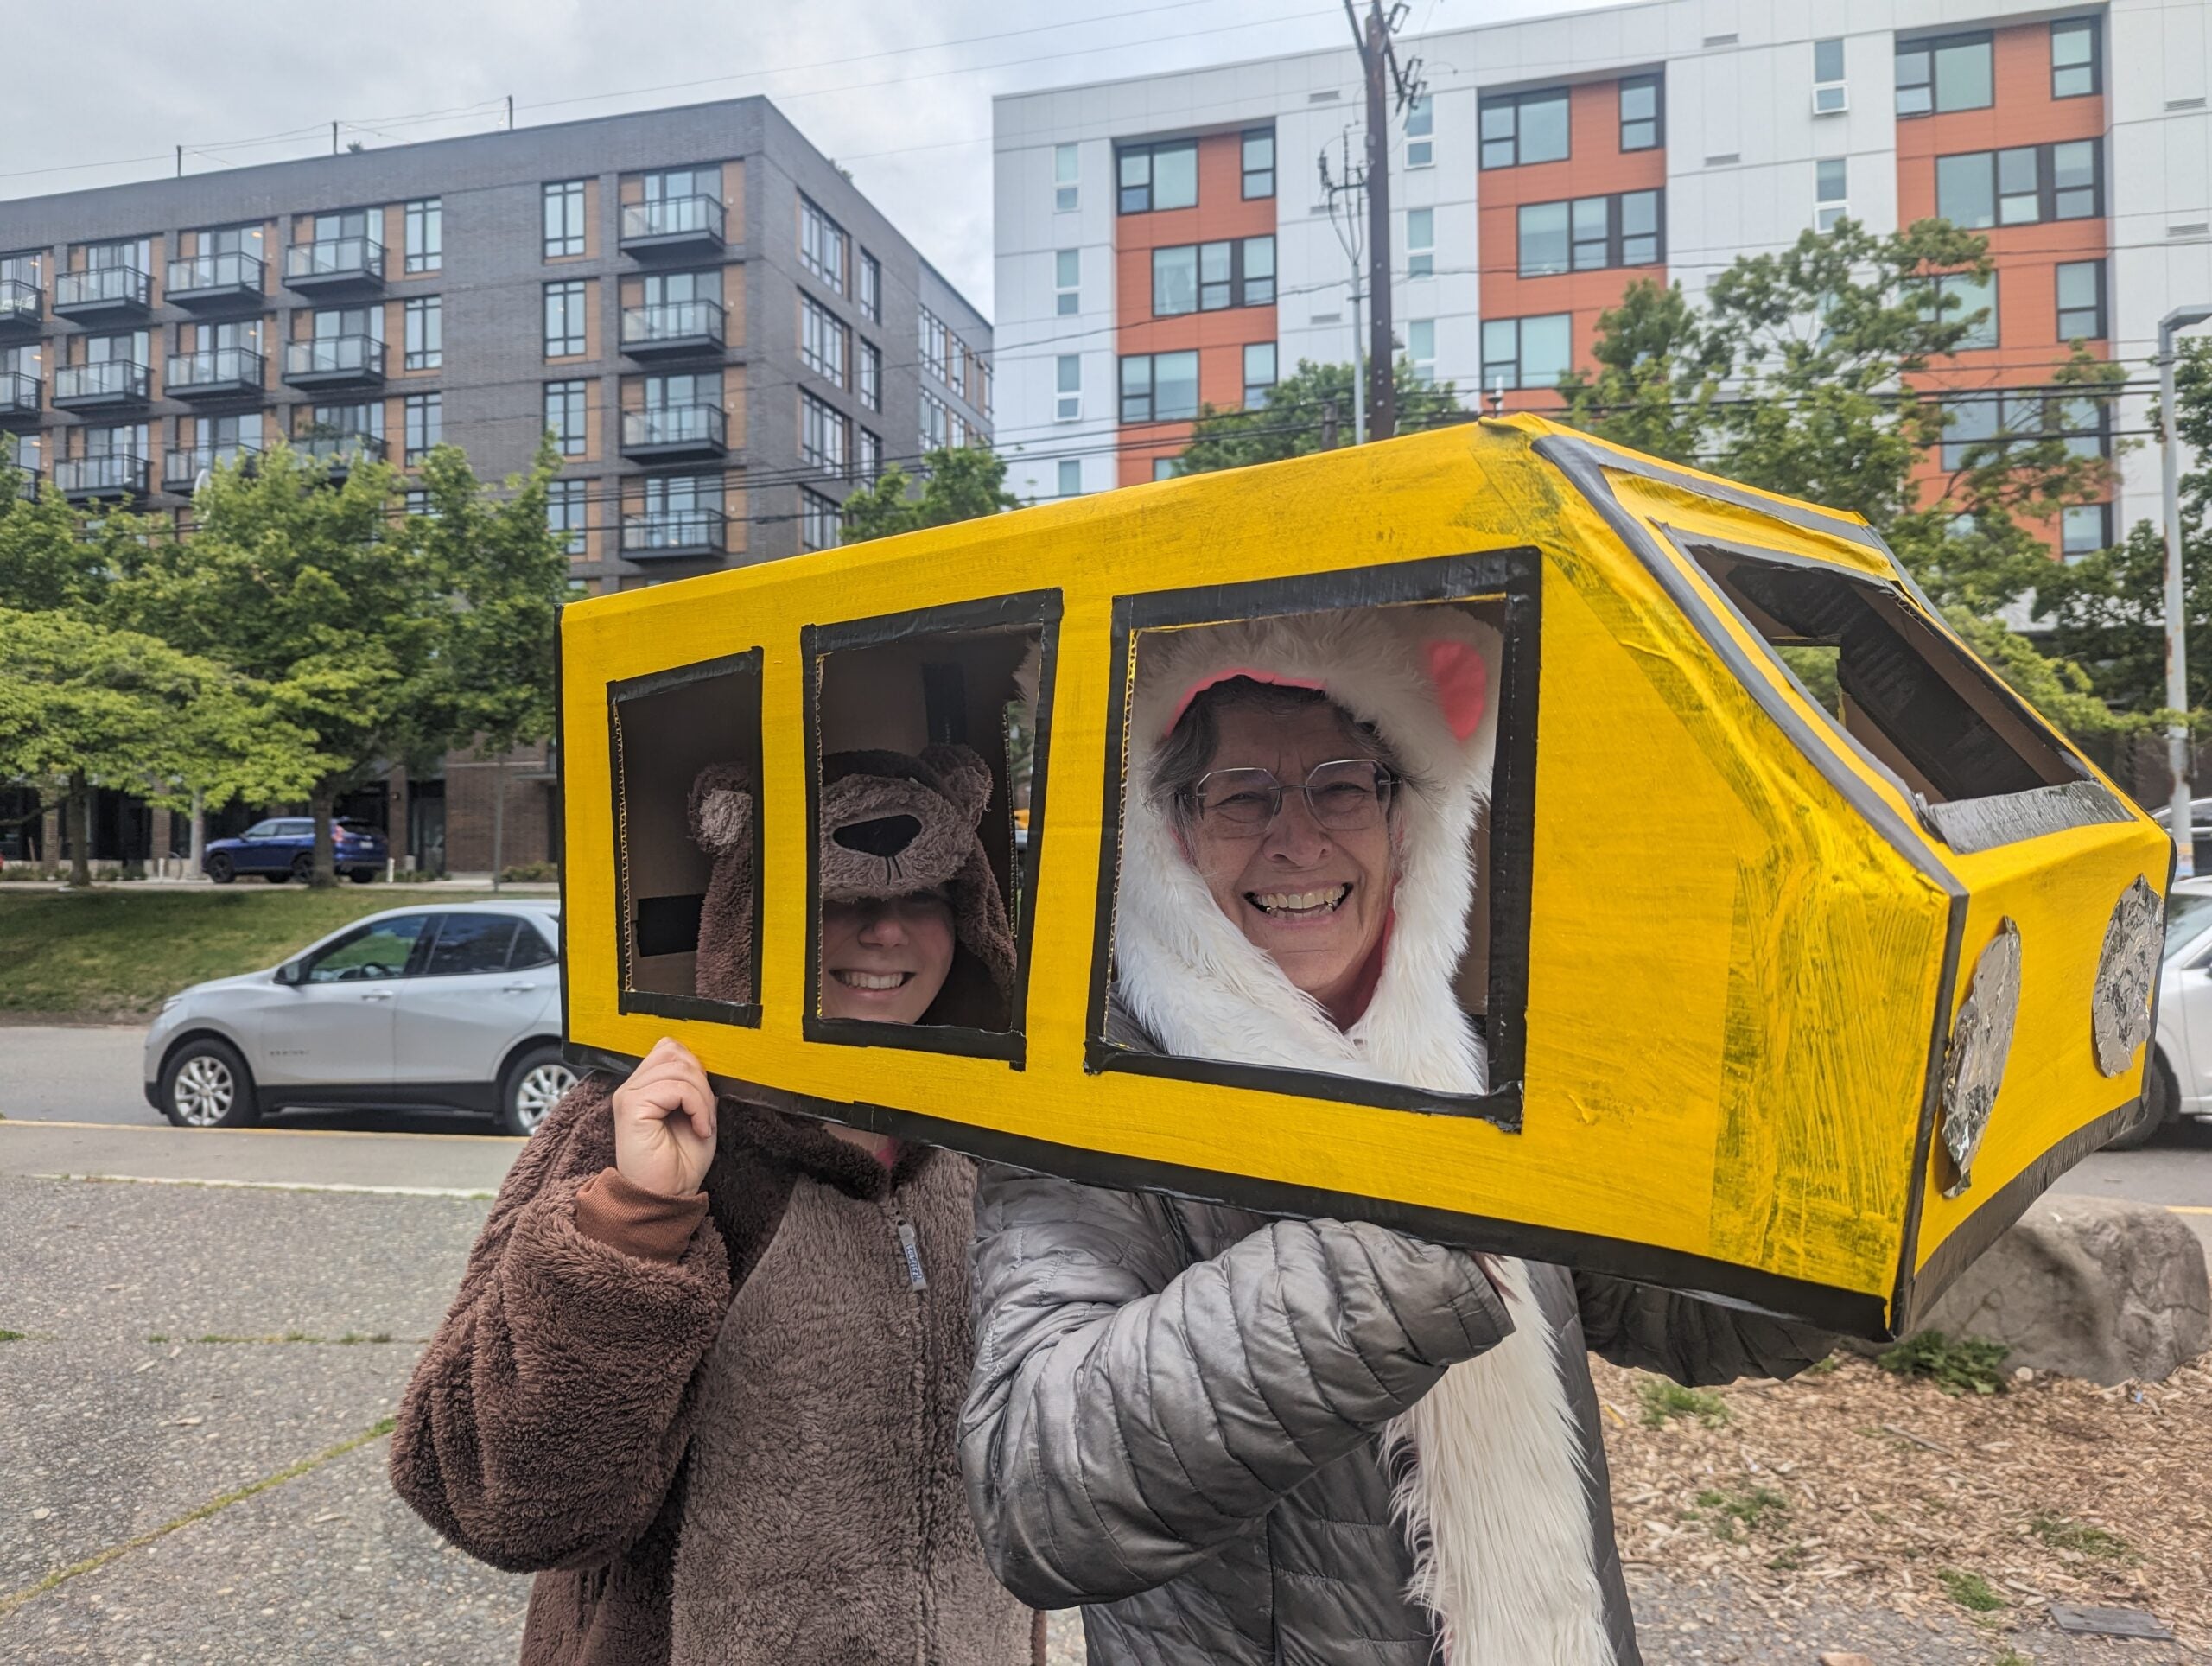 two adult volunteers in bear costumes pose inside cardboard "walking school bus" outside of Bailey Gatzert